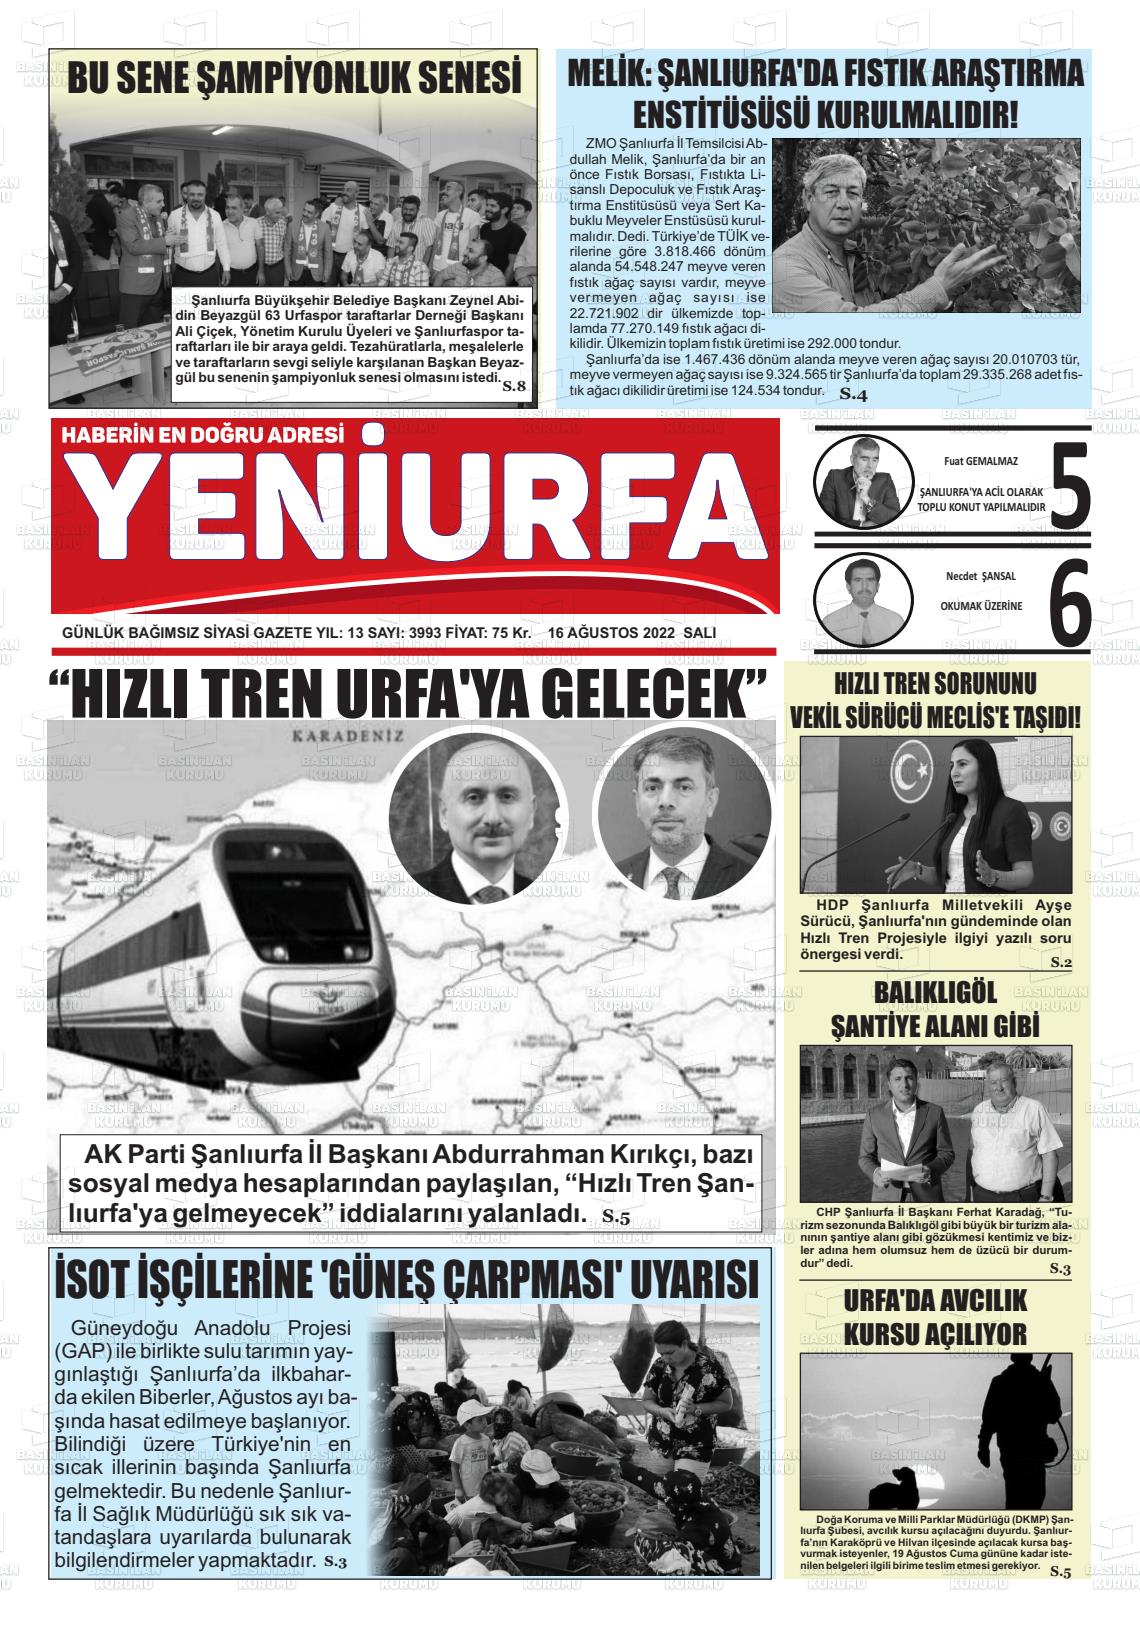 16 Ağustos 2022 Yeni Urfa Gazete Manşeti